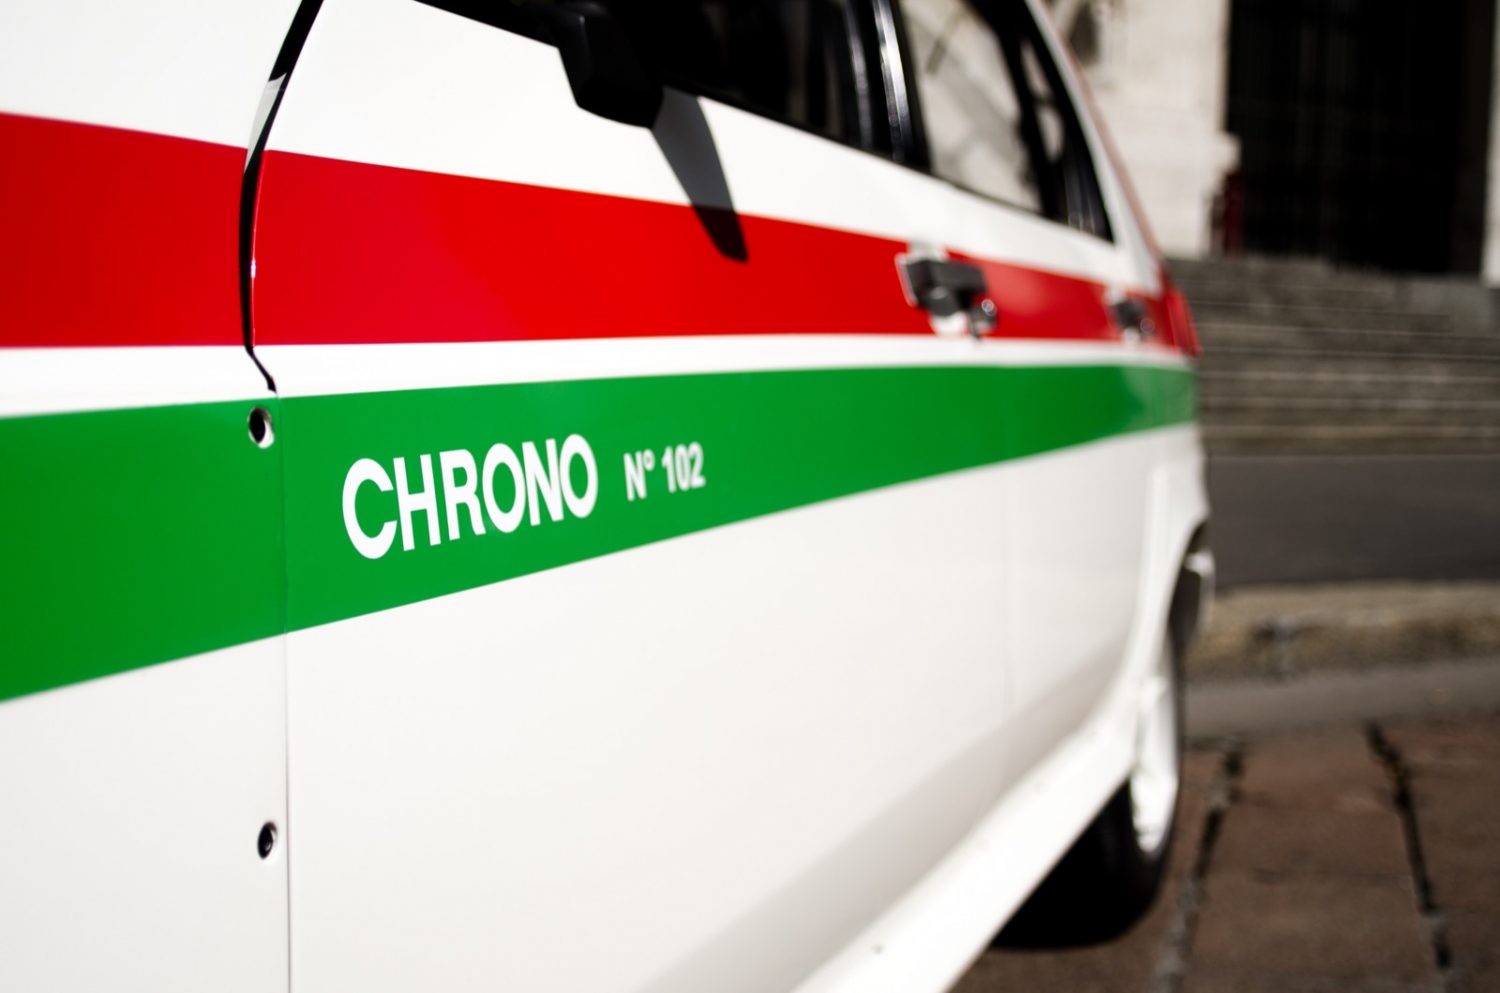 Citroën Visa Chrono